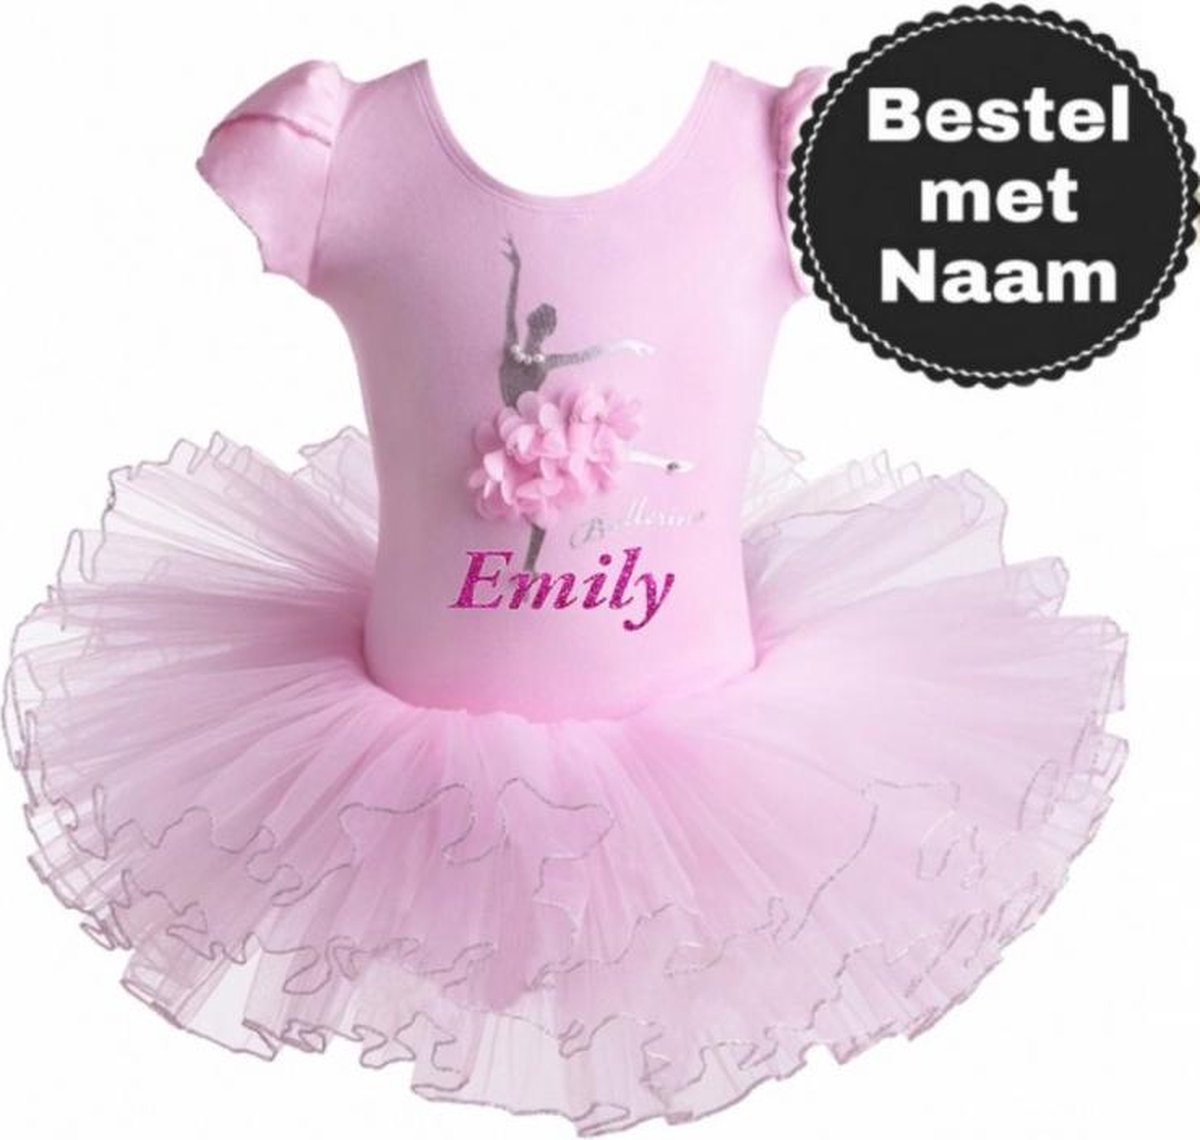 Balletpakje Ballerina + Eigen naam + Tutu - roze - Ballet - maat 134-140 prinsessen tutu verkleed jurk meisje